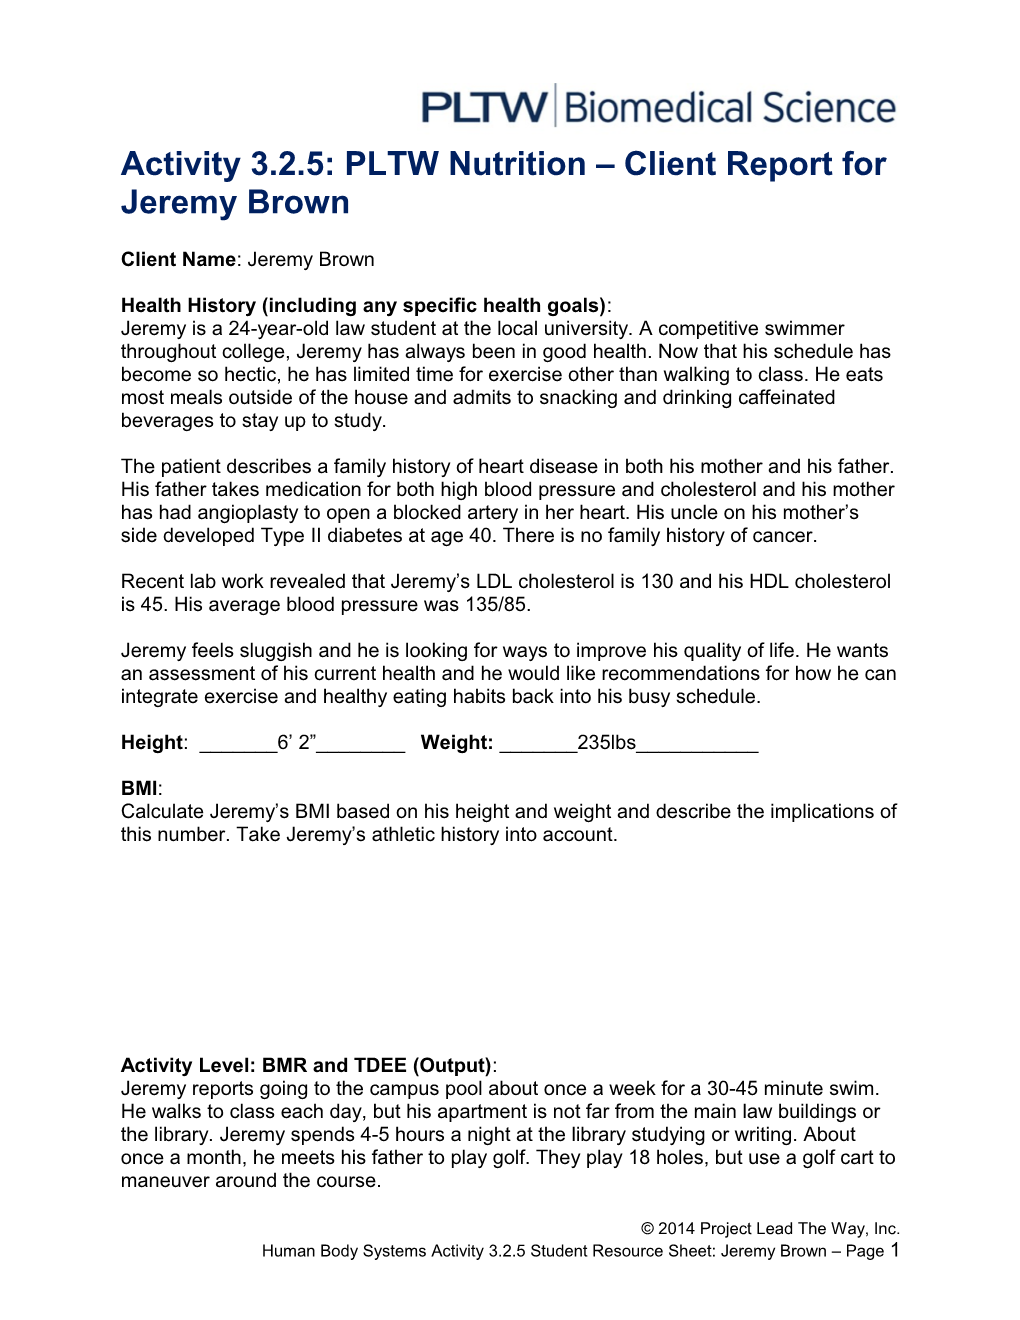 Activity 3.2.5: PLTW Nutrition Client Report for Jeremy Brown